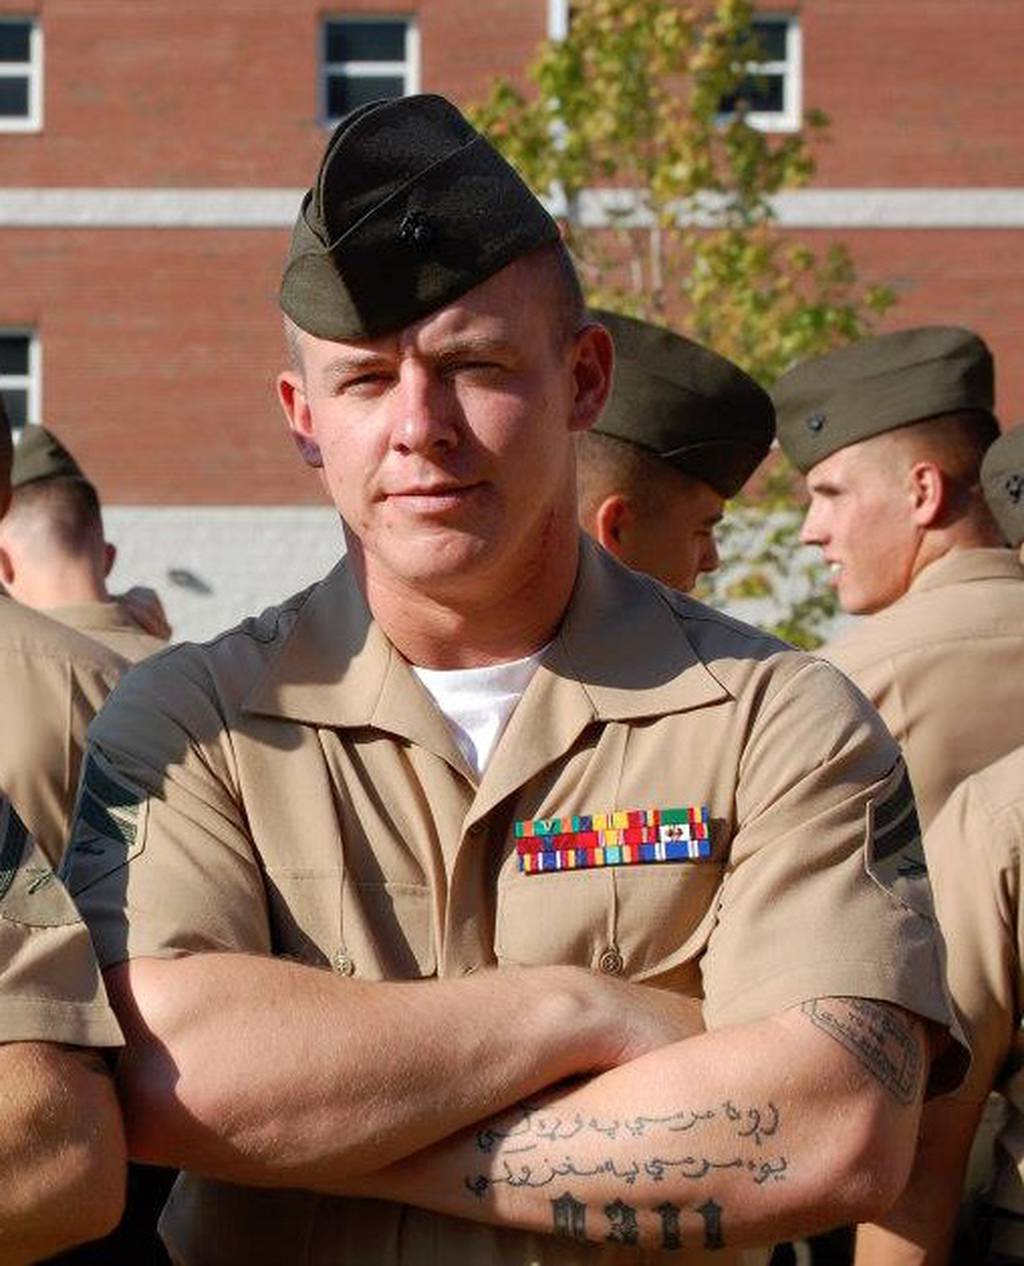 Tough tattoo regs sink stellar Marine's career